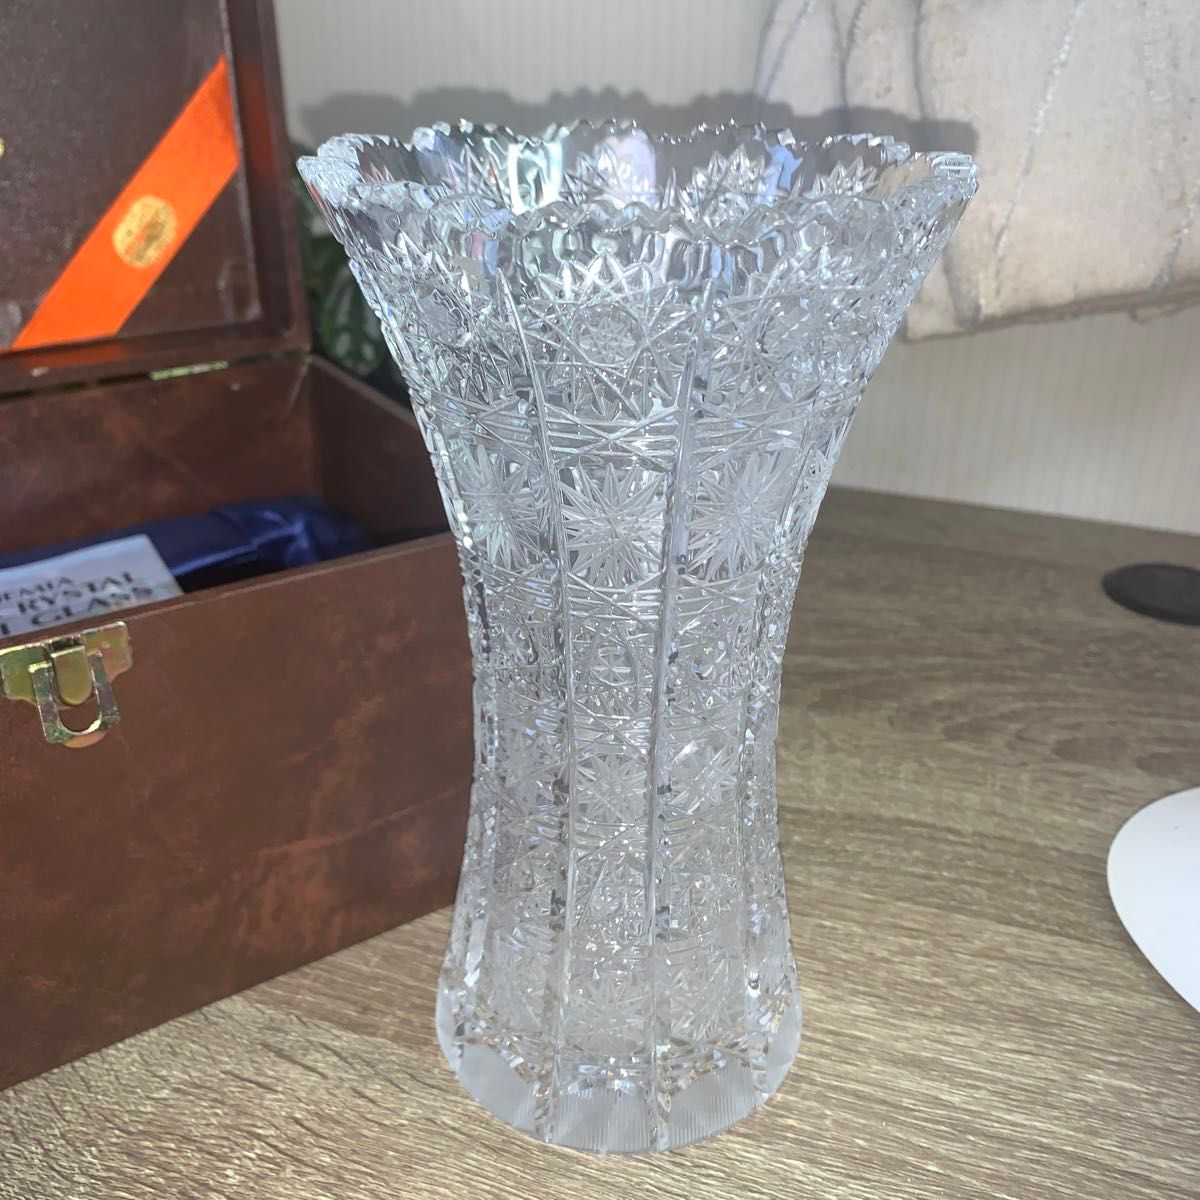 BOHEMIA(ボヘミア)KALI GLASS花瓶 500PK 51683/500/8 箱付き クリスタル